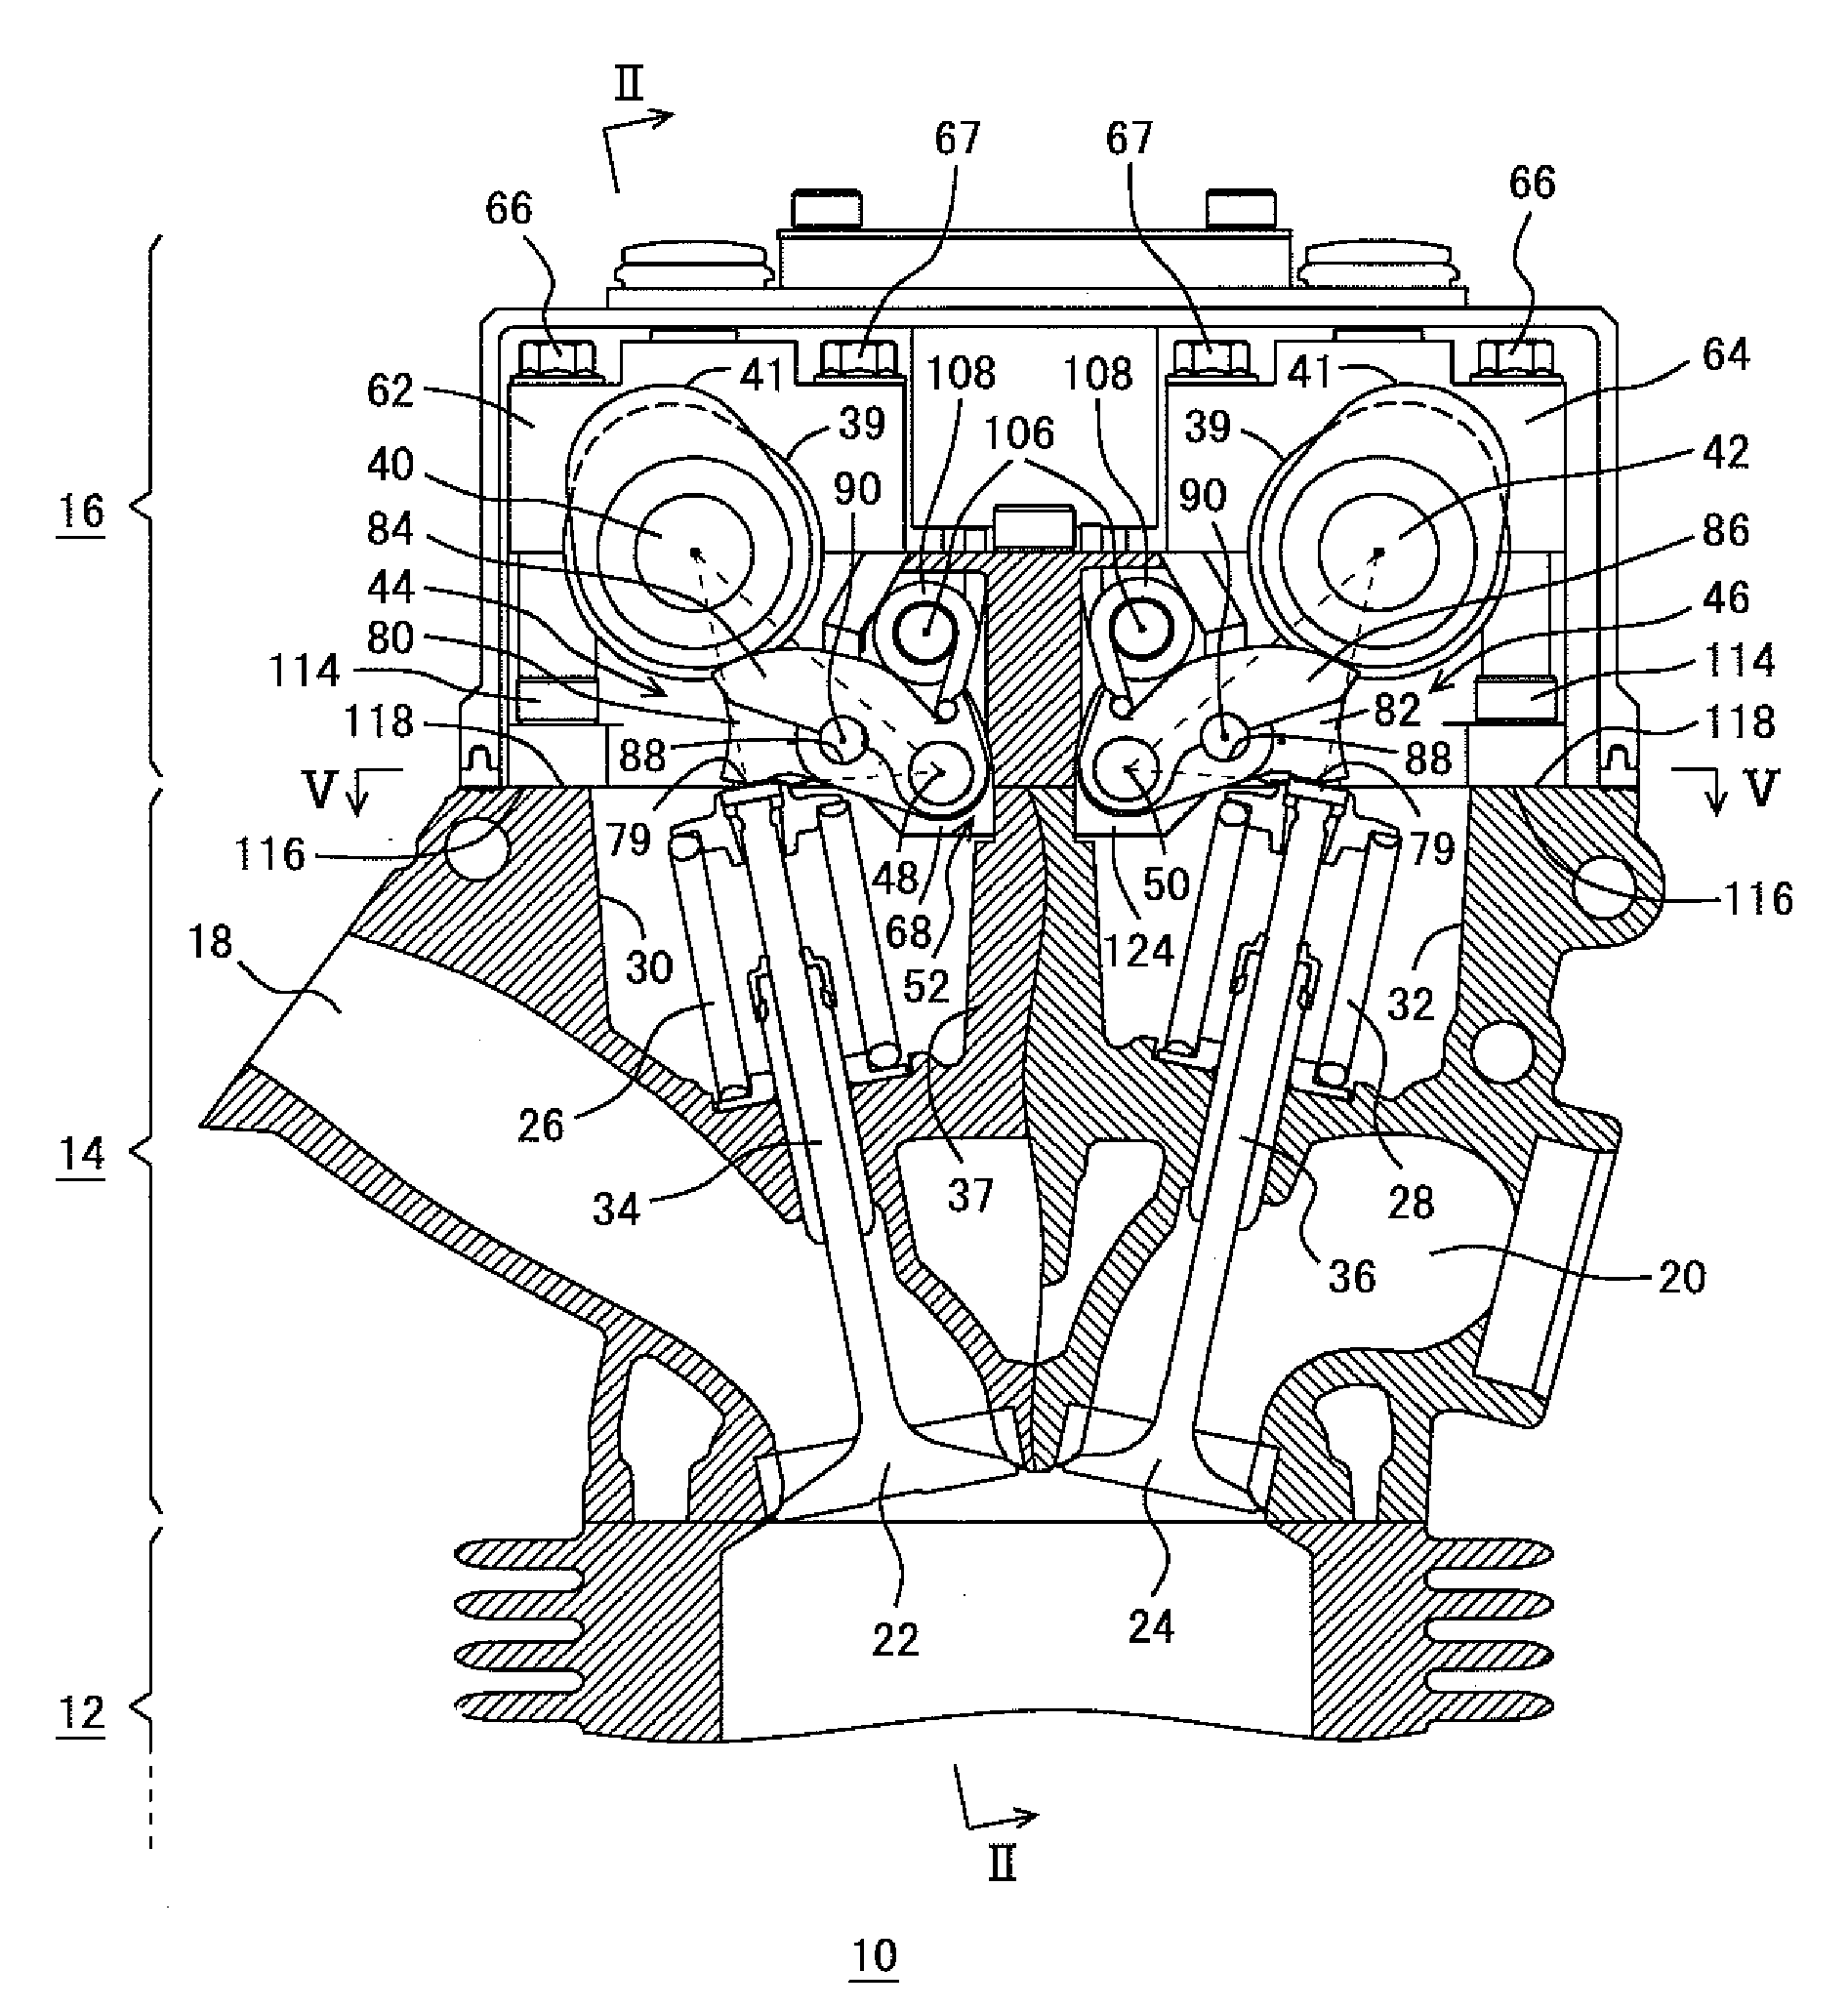 Engine having variable valve mechanism